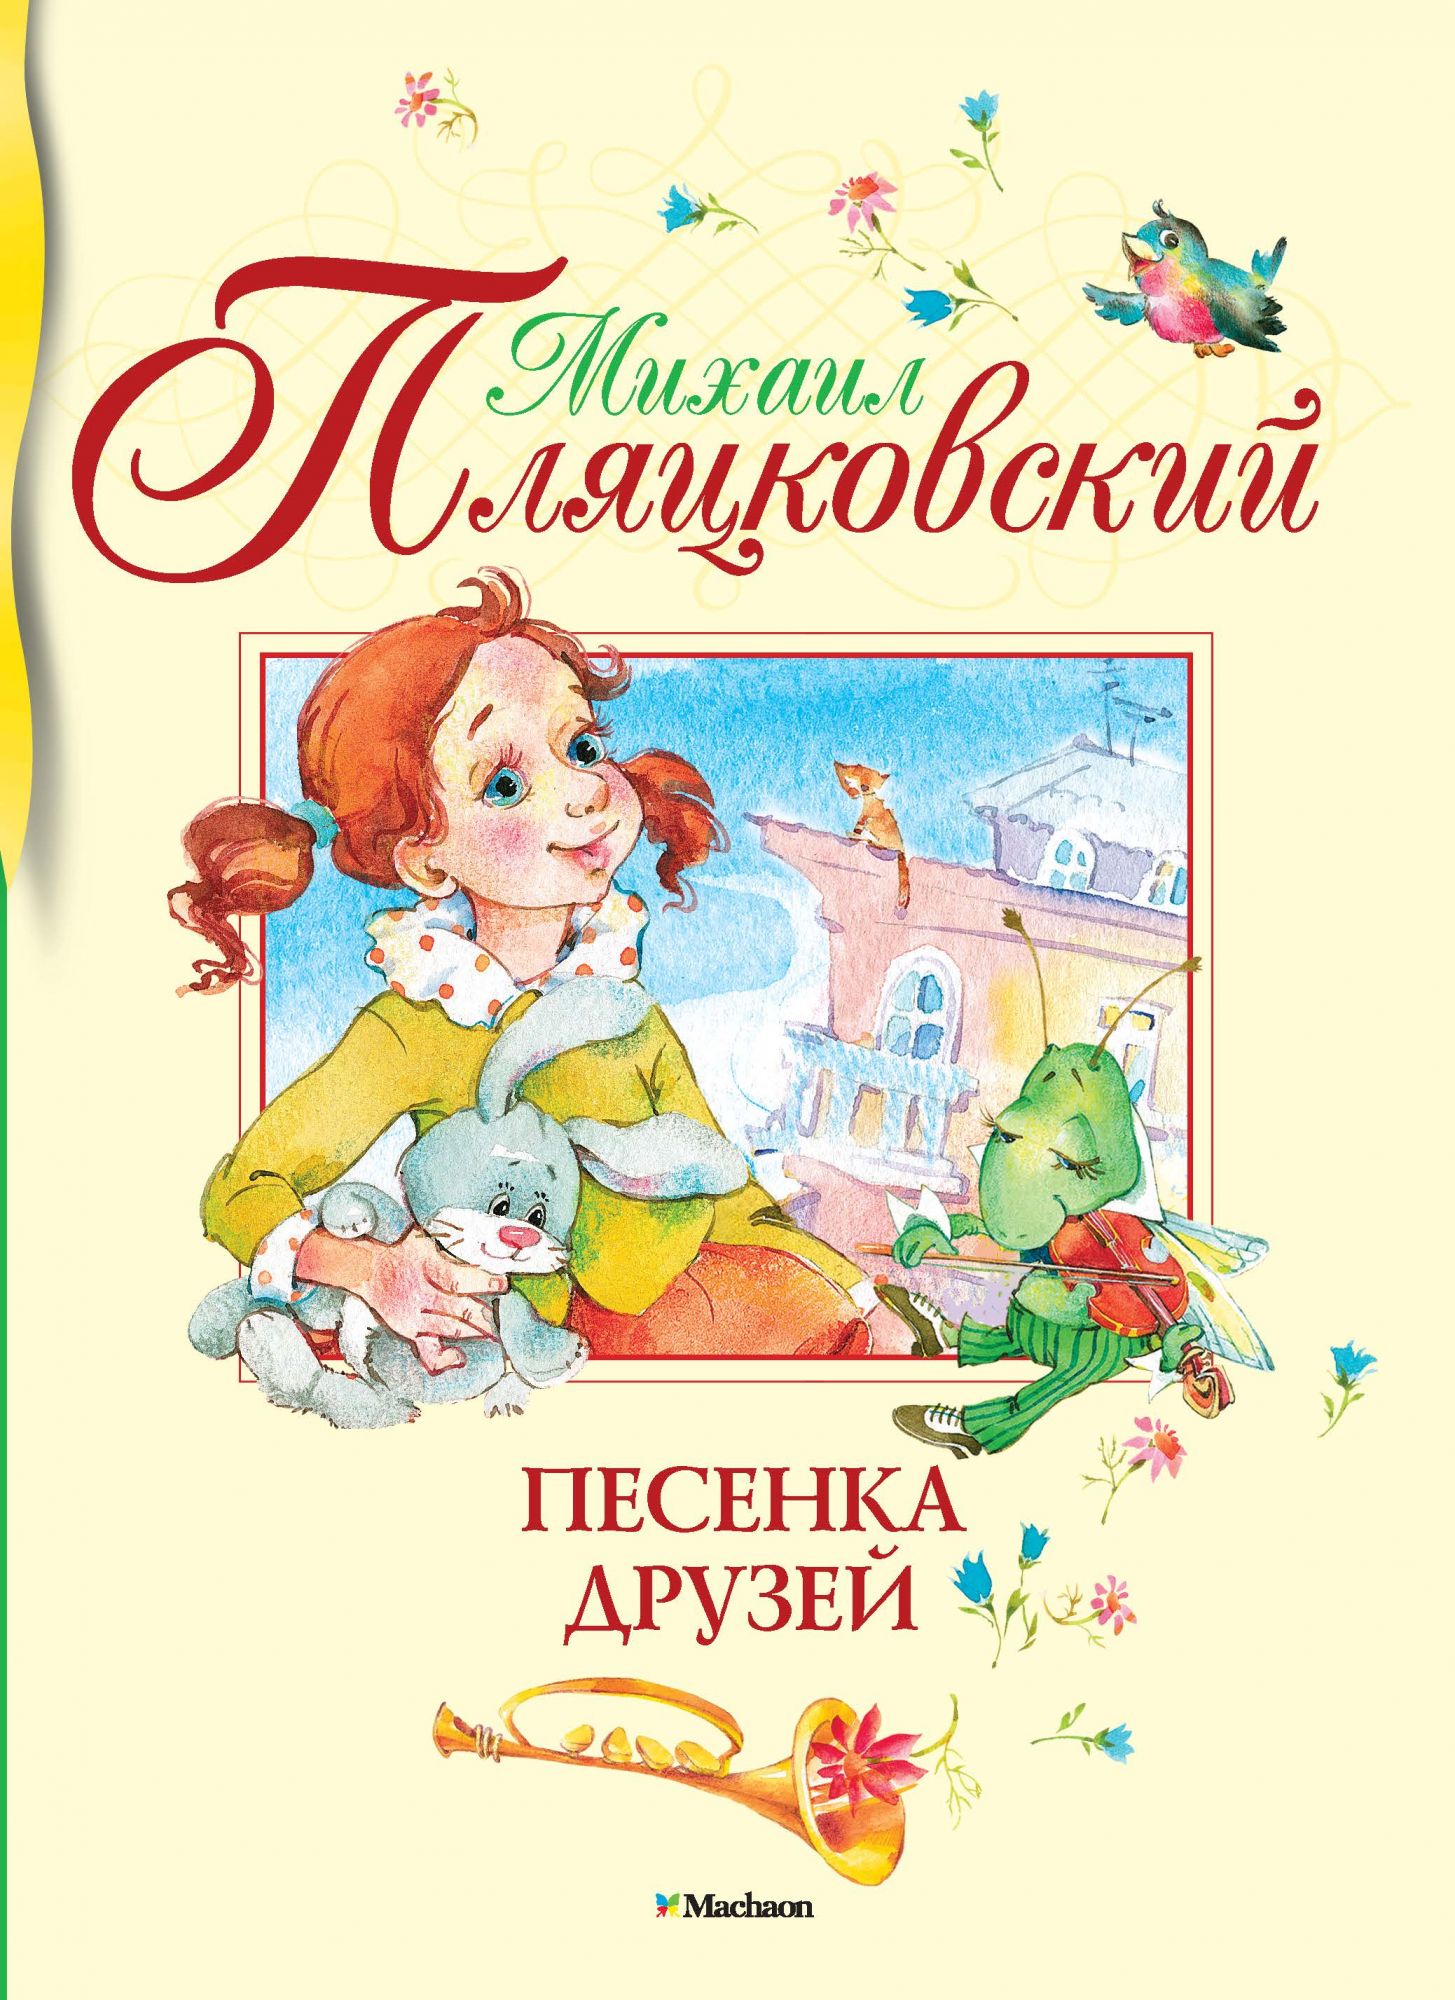 Книги Пляцковского для детей